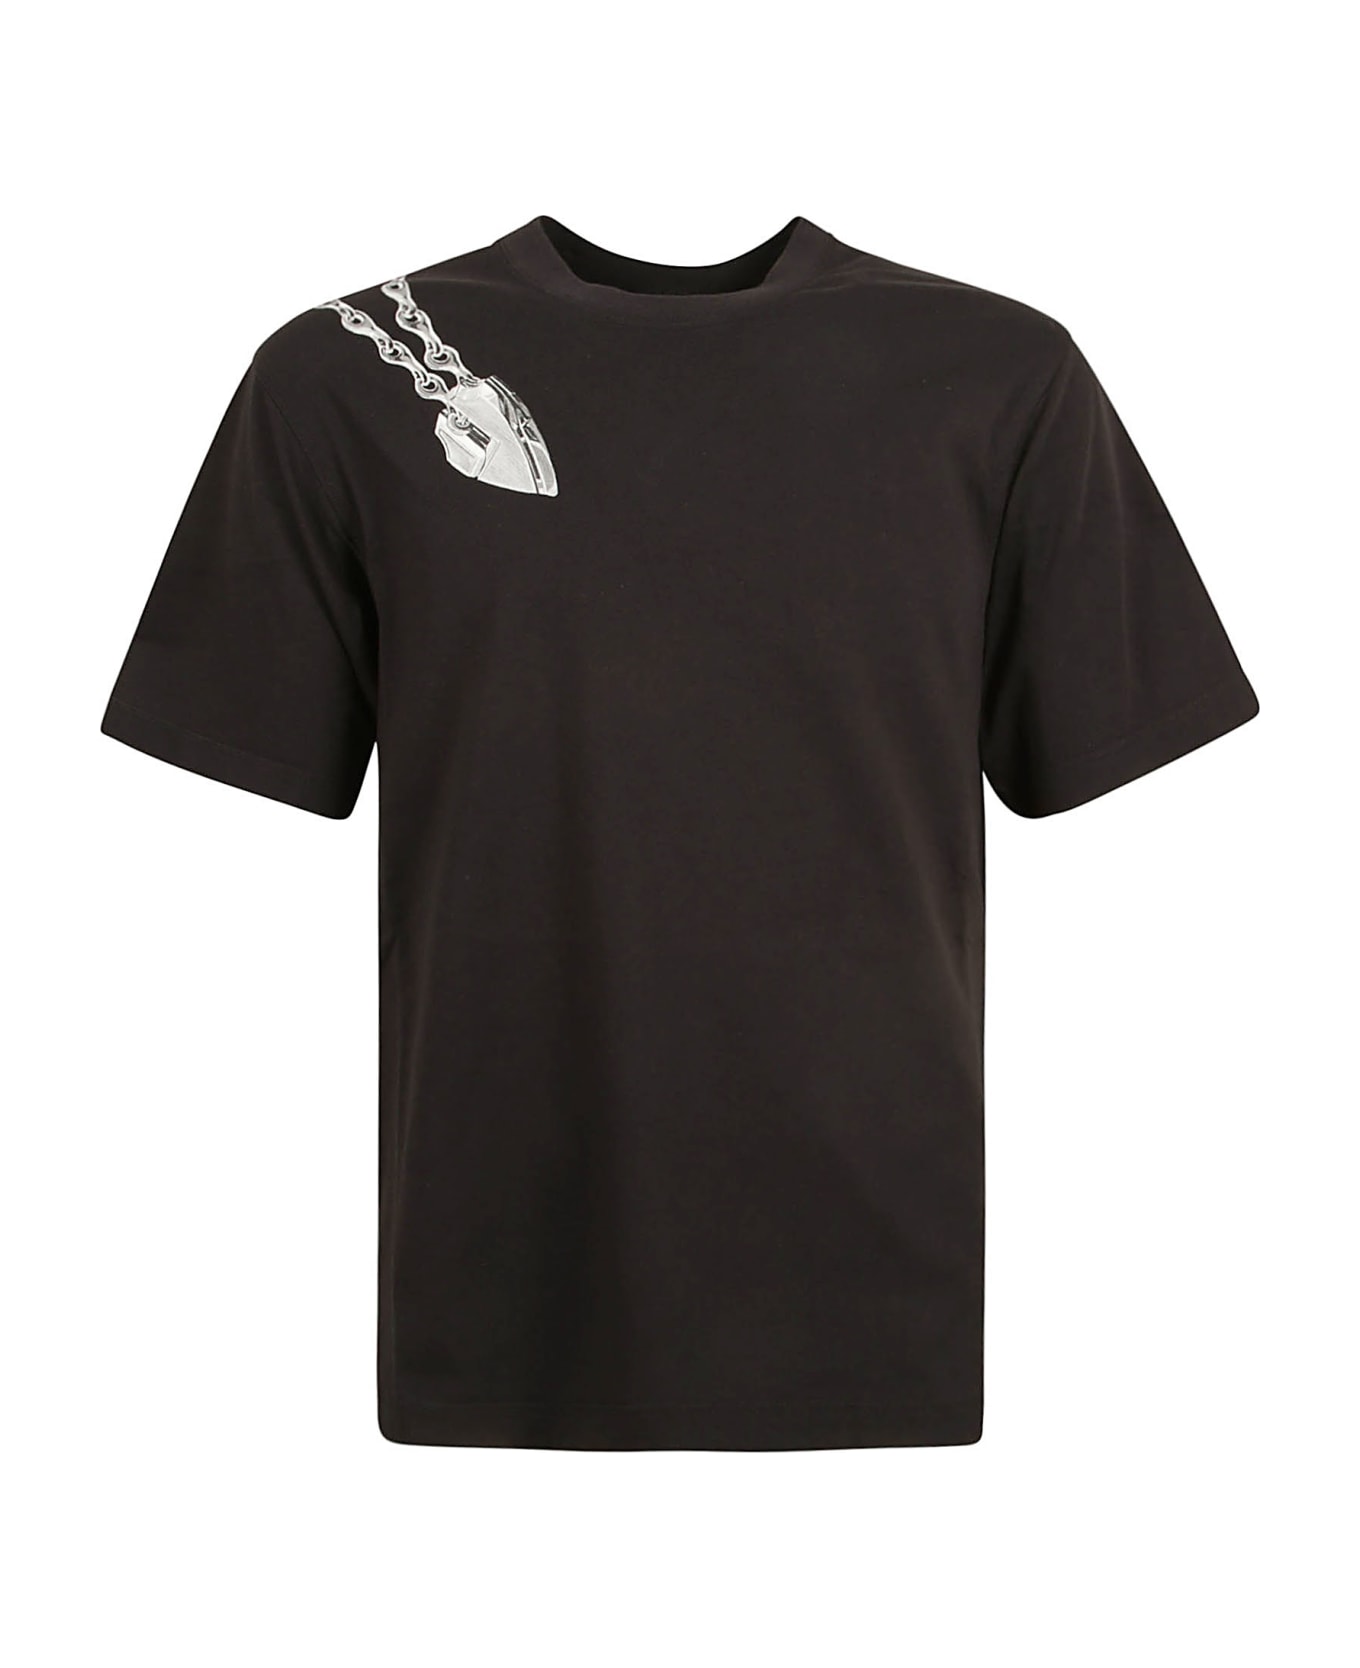 Burberry Round Neck Printed T-shirt - Black ip pattern